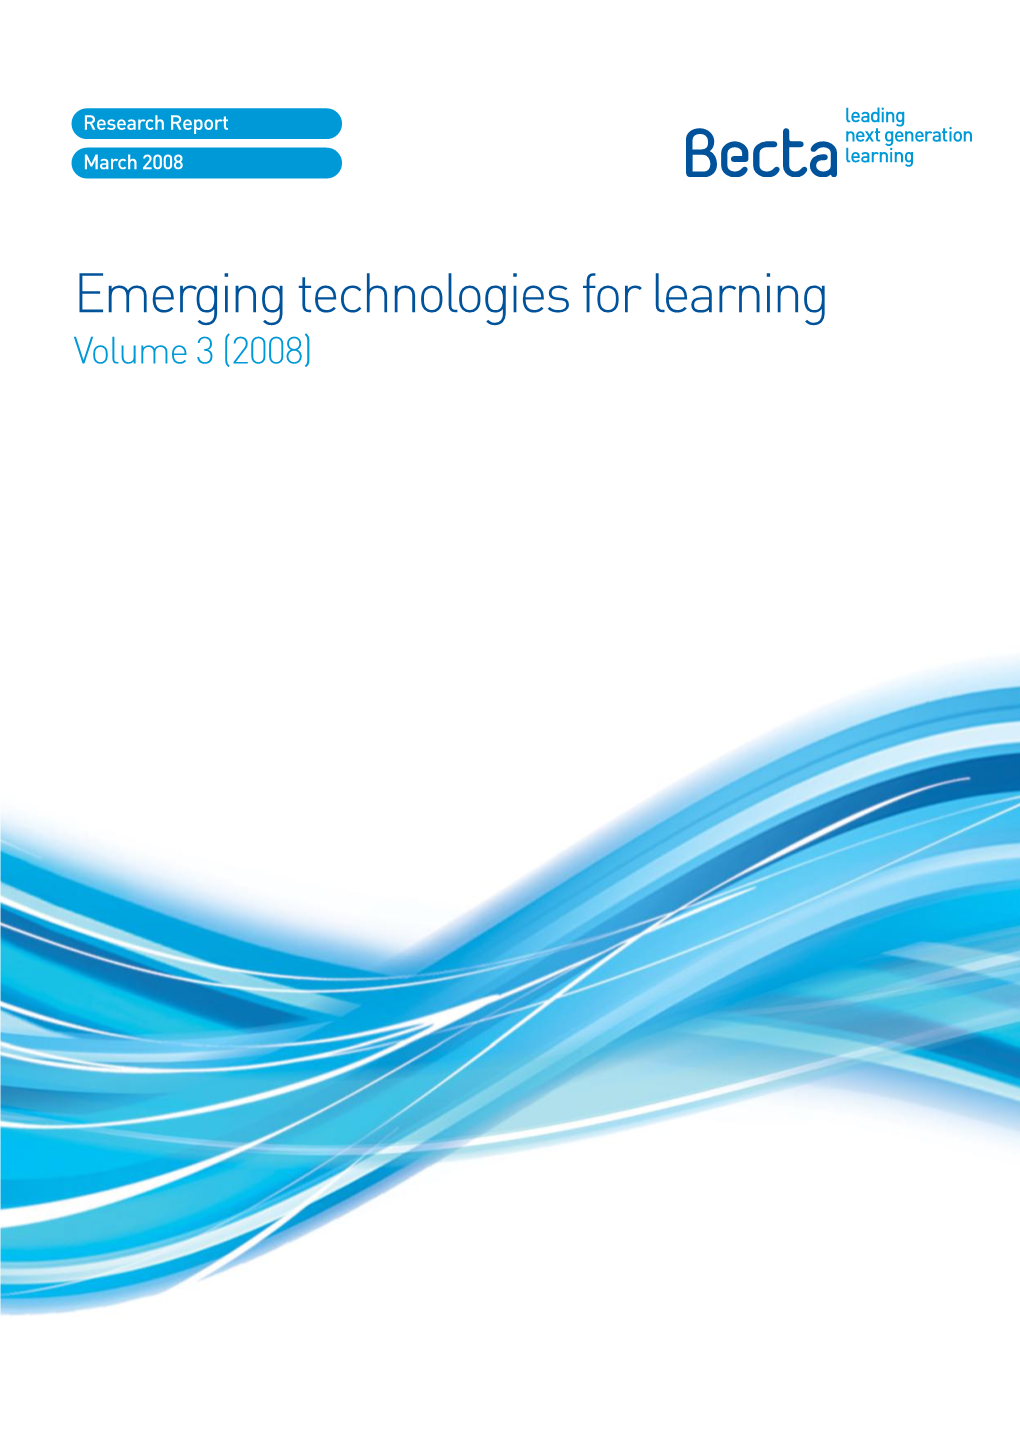 Emerging Technologies for Learning Volume 3 (2008) 02 Emerging Technologies for Learning – Volume 3 (2008)